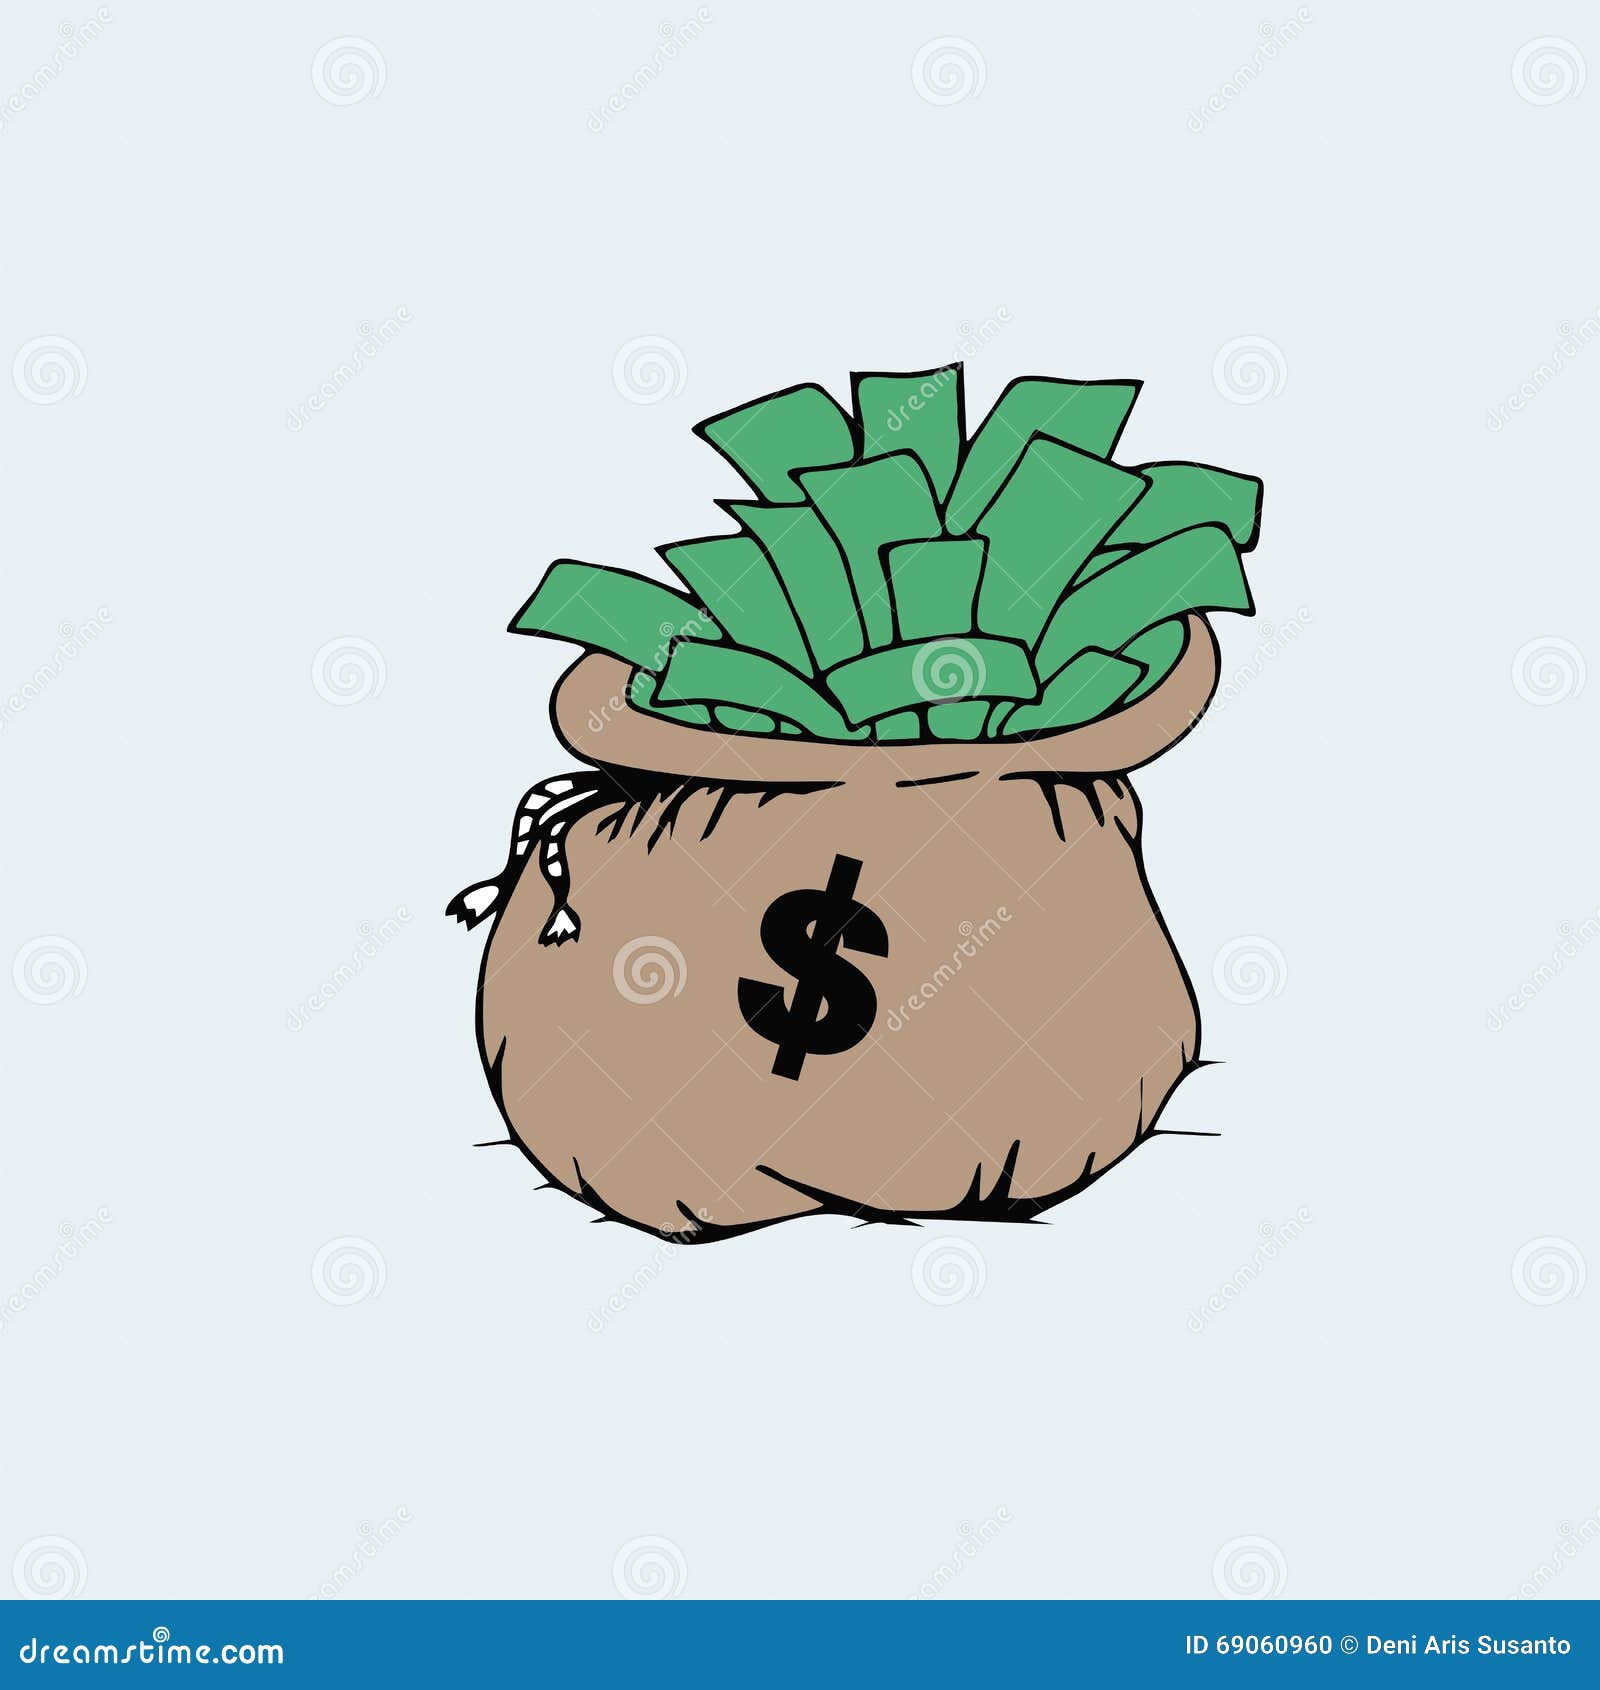 Money bag Cartoon stock illustration. Illustration of hand - 69060960